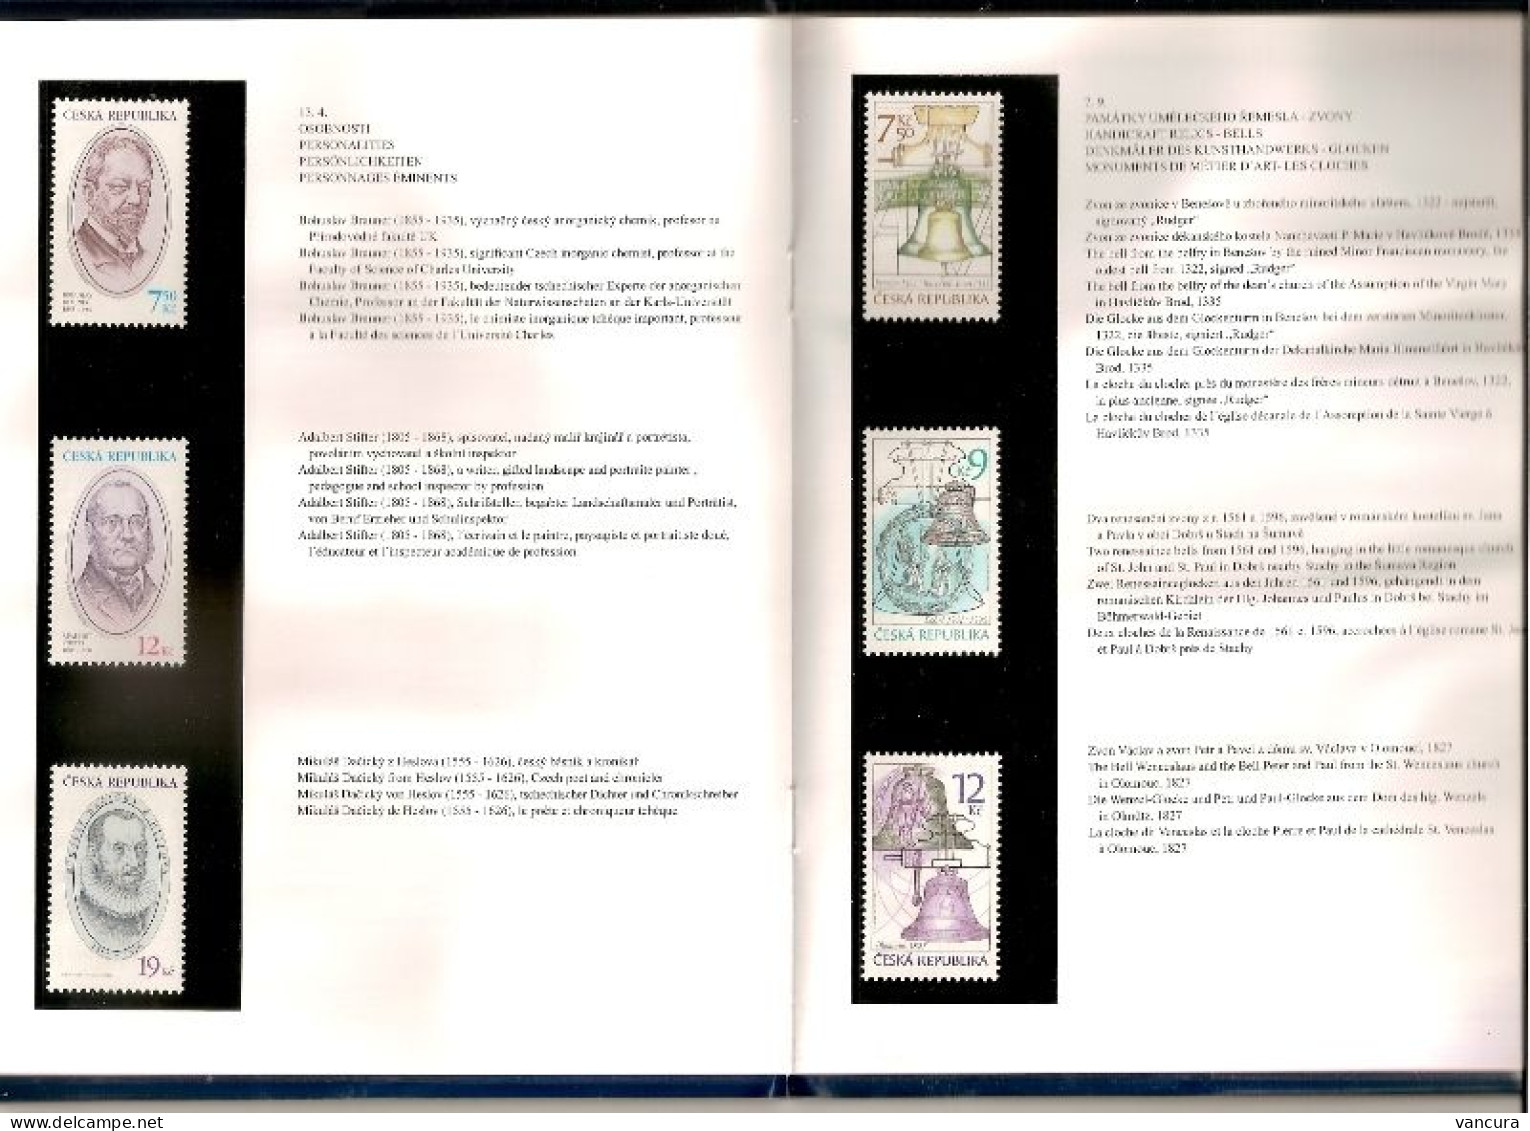 Czech Republic Year Book 2005 (with blackprint)